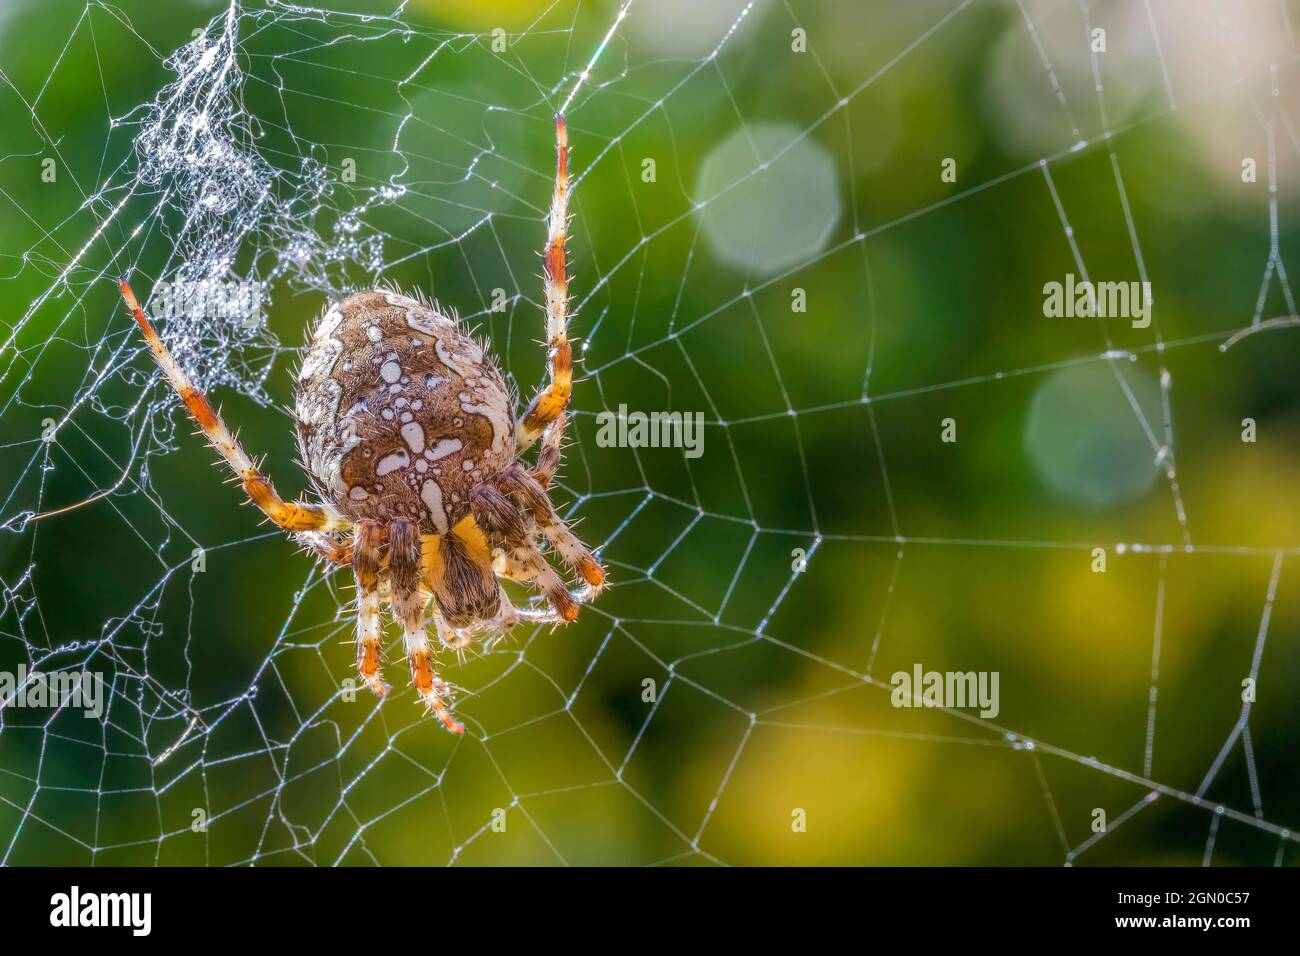 Garden spider, Araneus diadematus on web backlit by the sun, UK Stock Photo